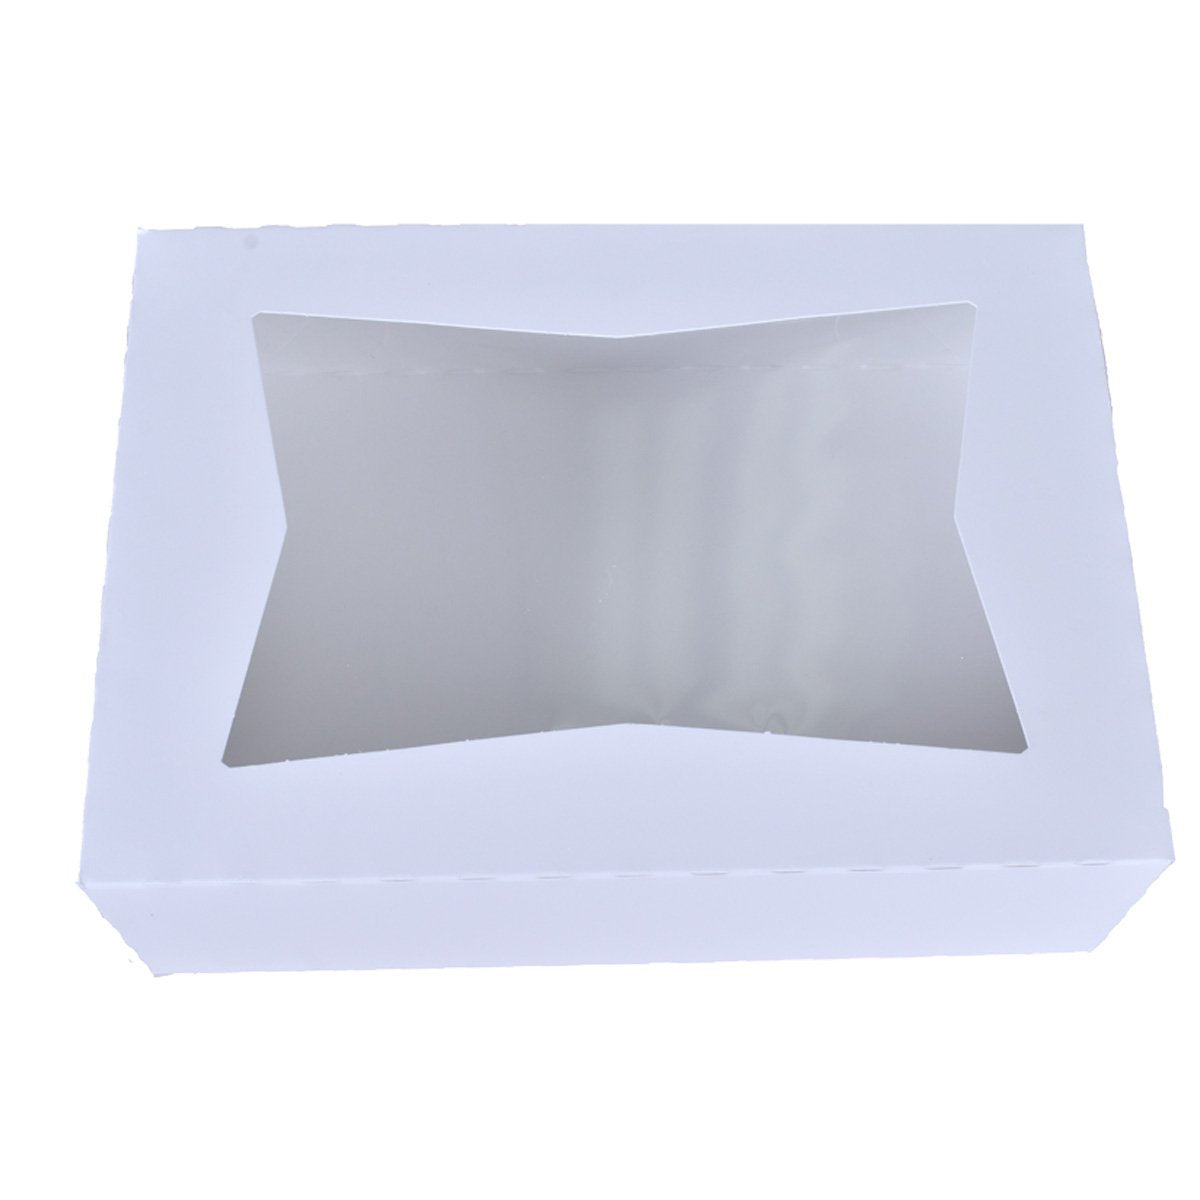 White Window Cake Boxes - 8x4x4 Bake Supply Plus Box - Bake Supply Plus